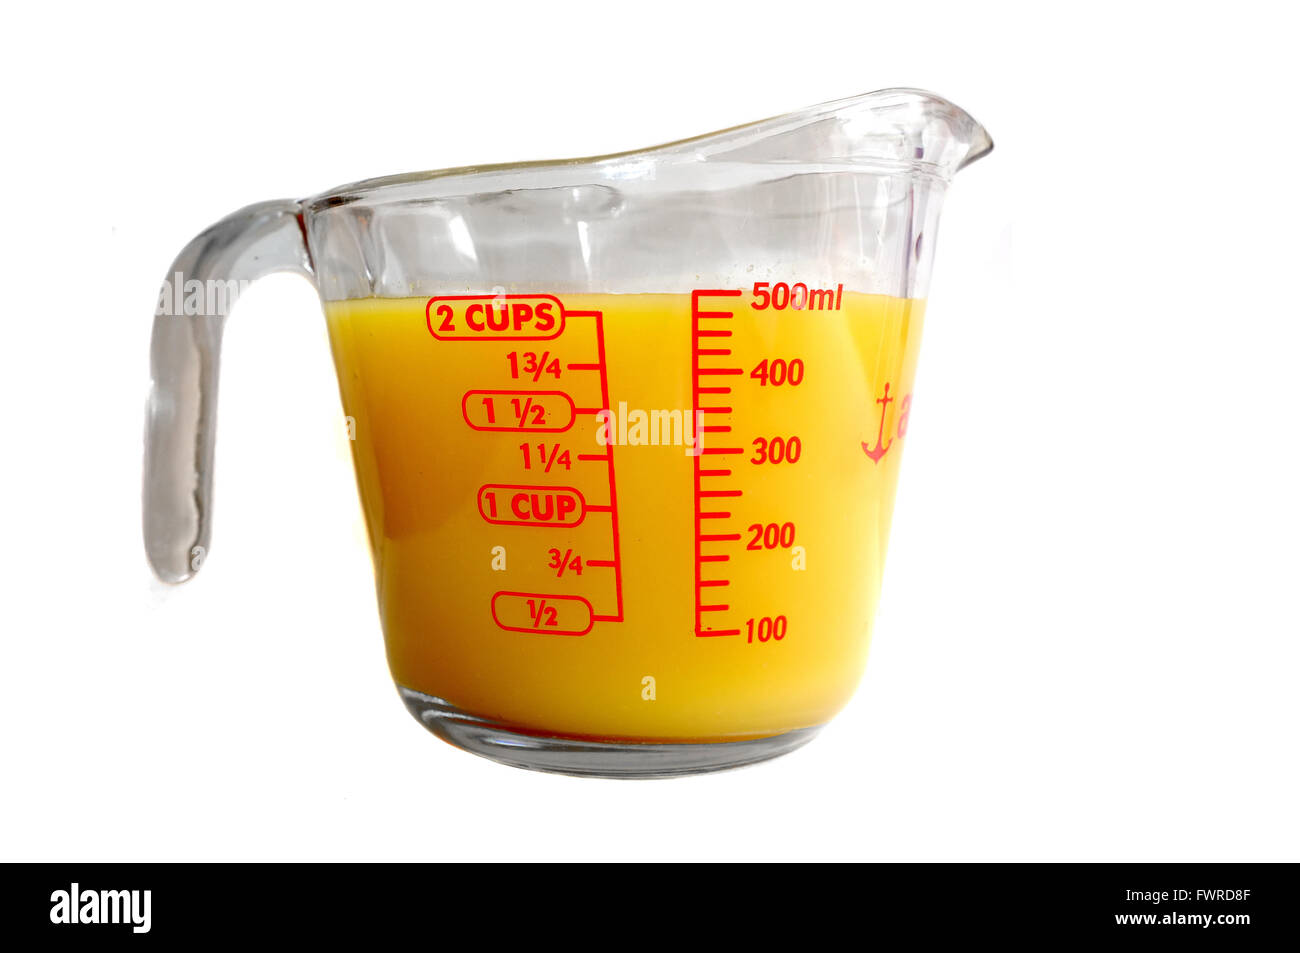 https://c8.alamy.com/comp/FWRD8F/a-pyrex-measuring-jug-full-of-orange-coloured-liquid-photographed-FWRD8F.jpg